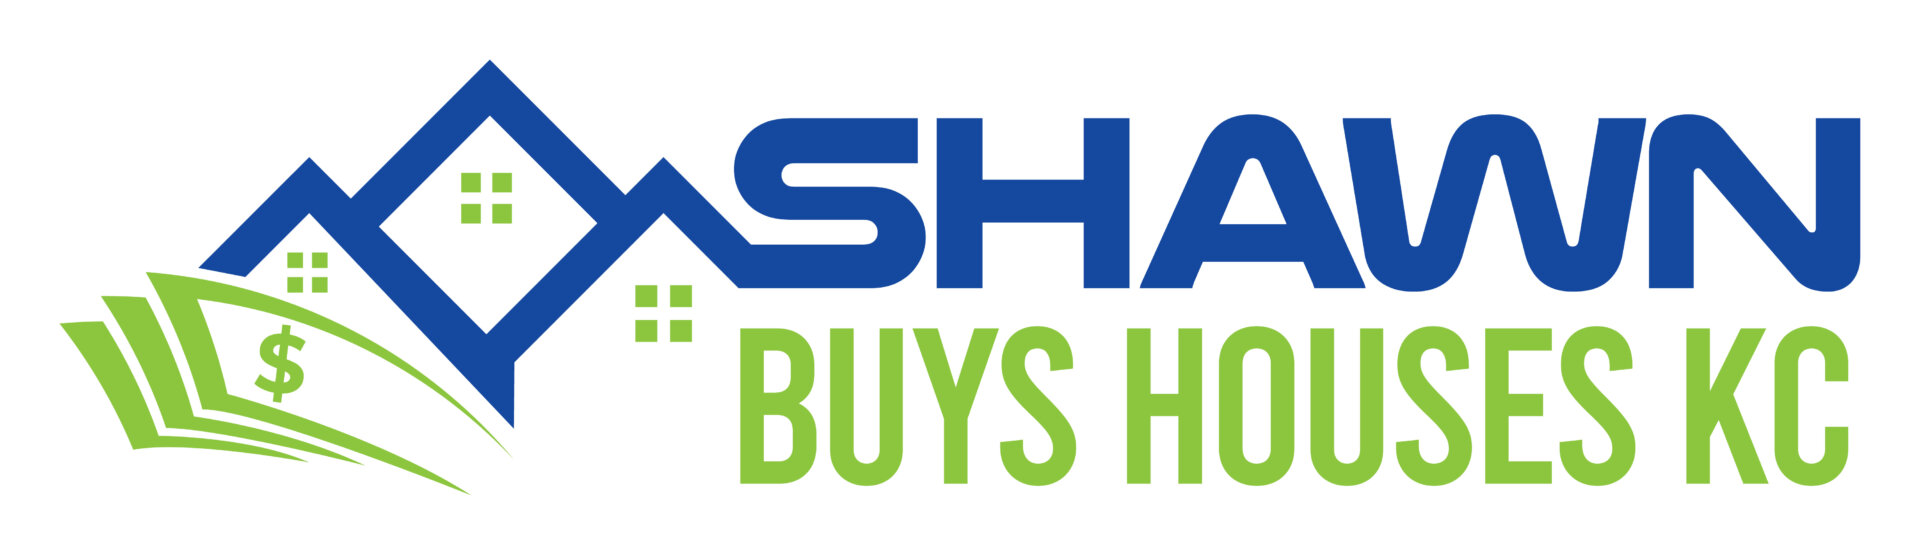 Shawn Buys Houses KC logo